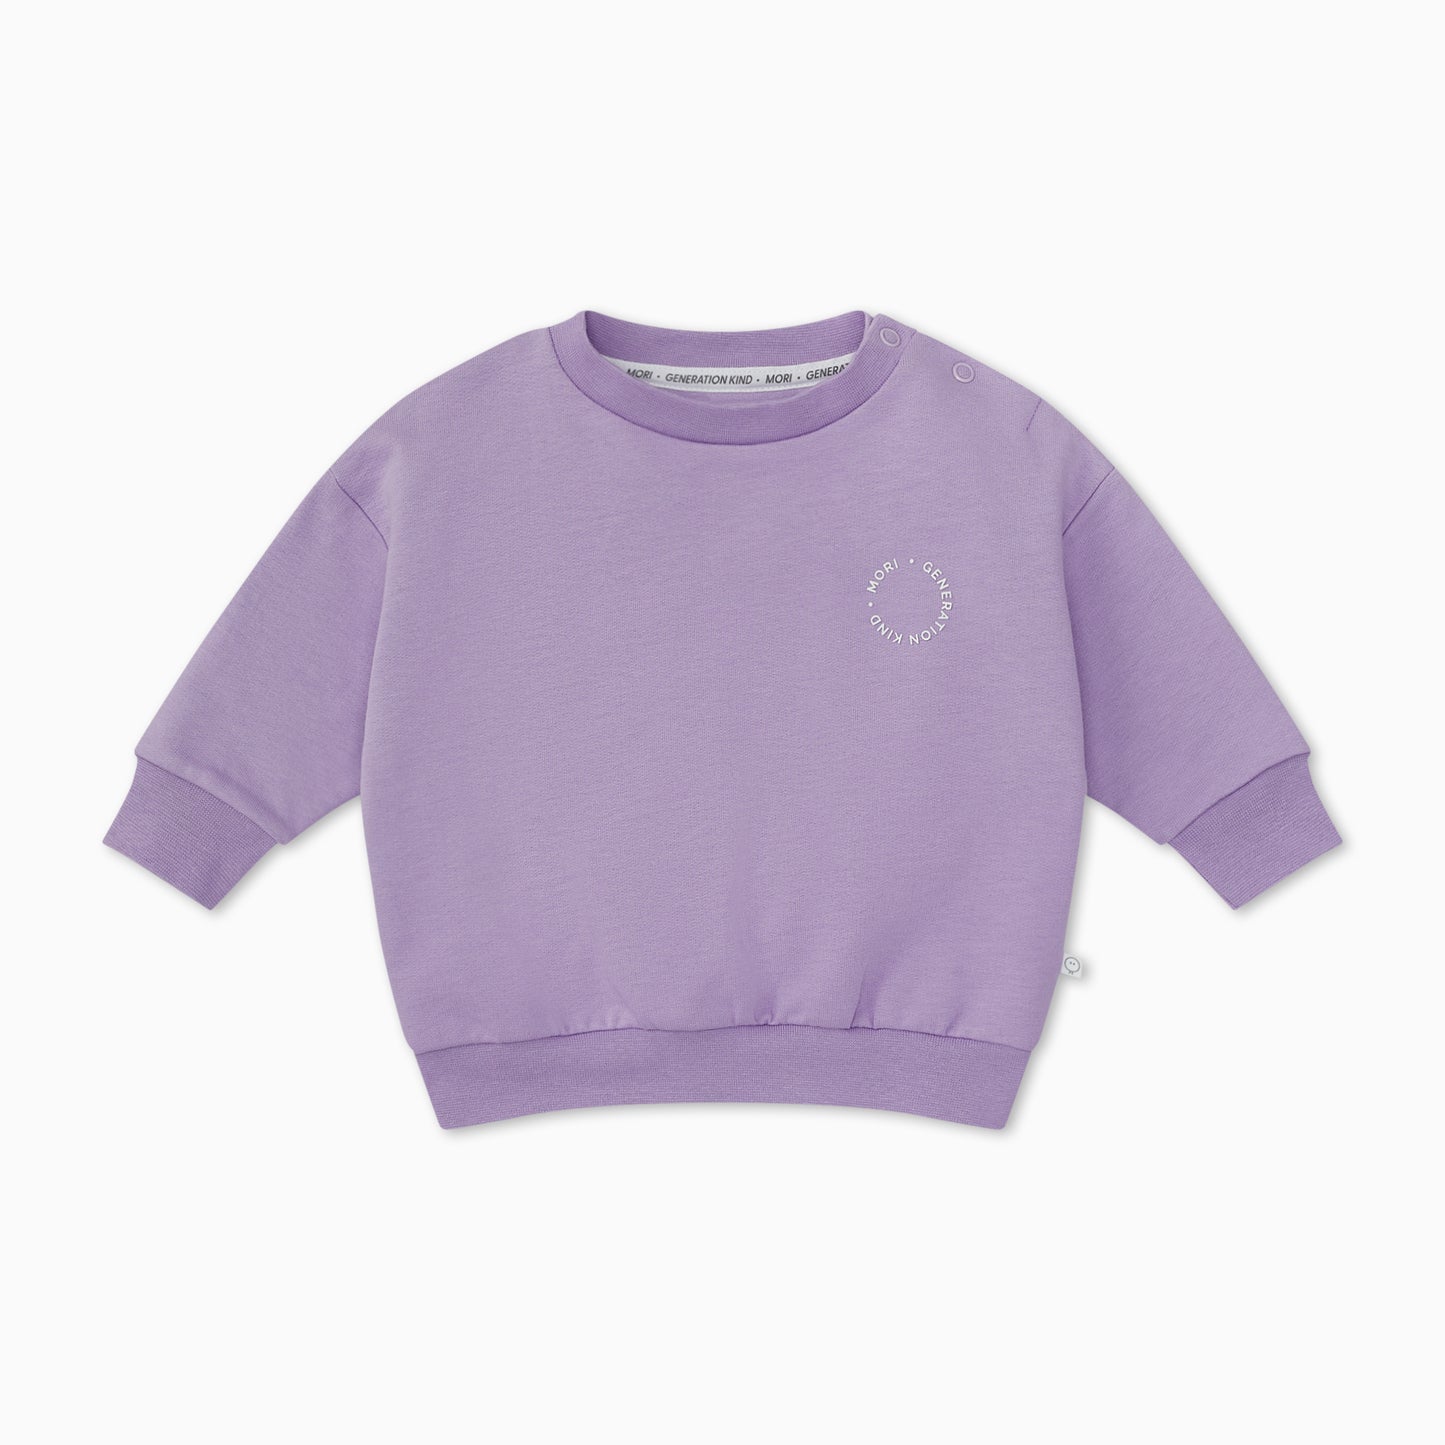 Generation Kind oversized sweatshirt - lilac